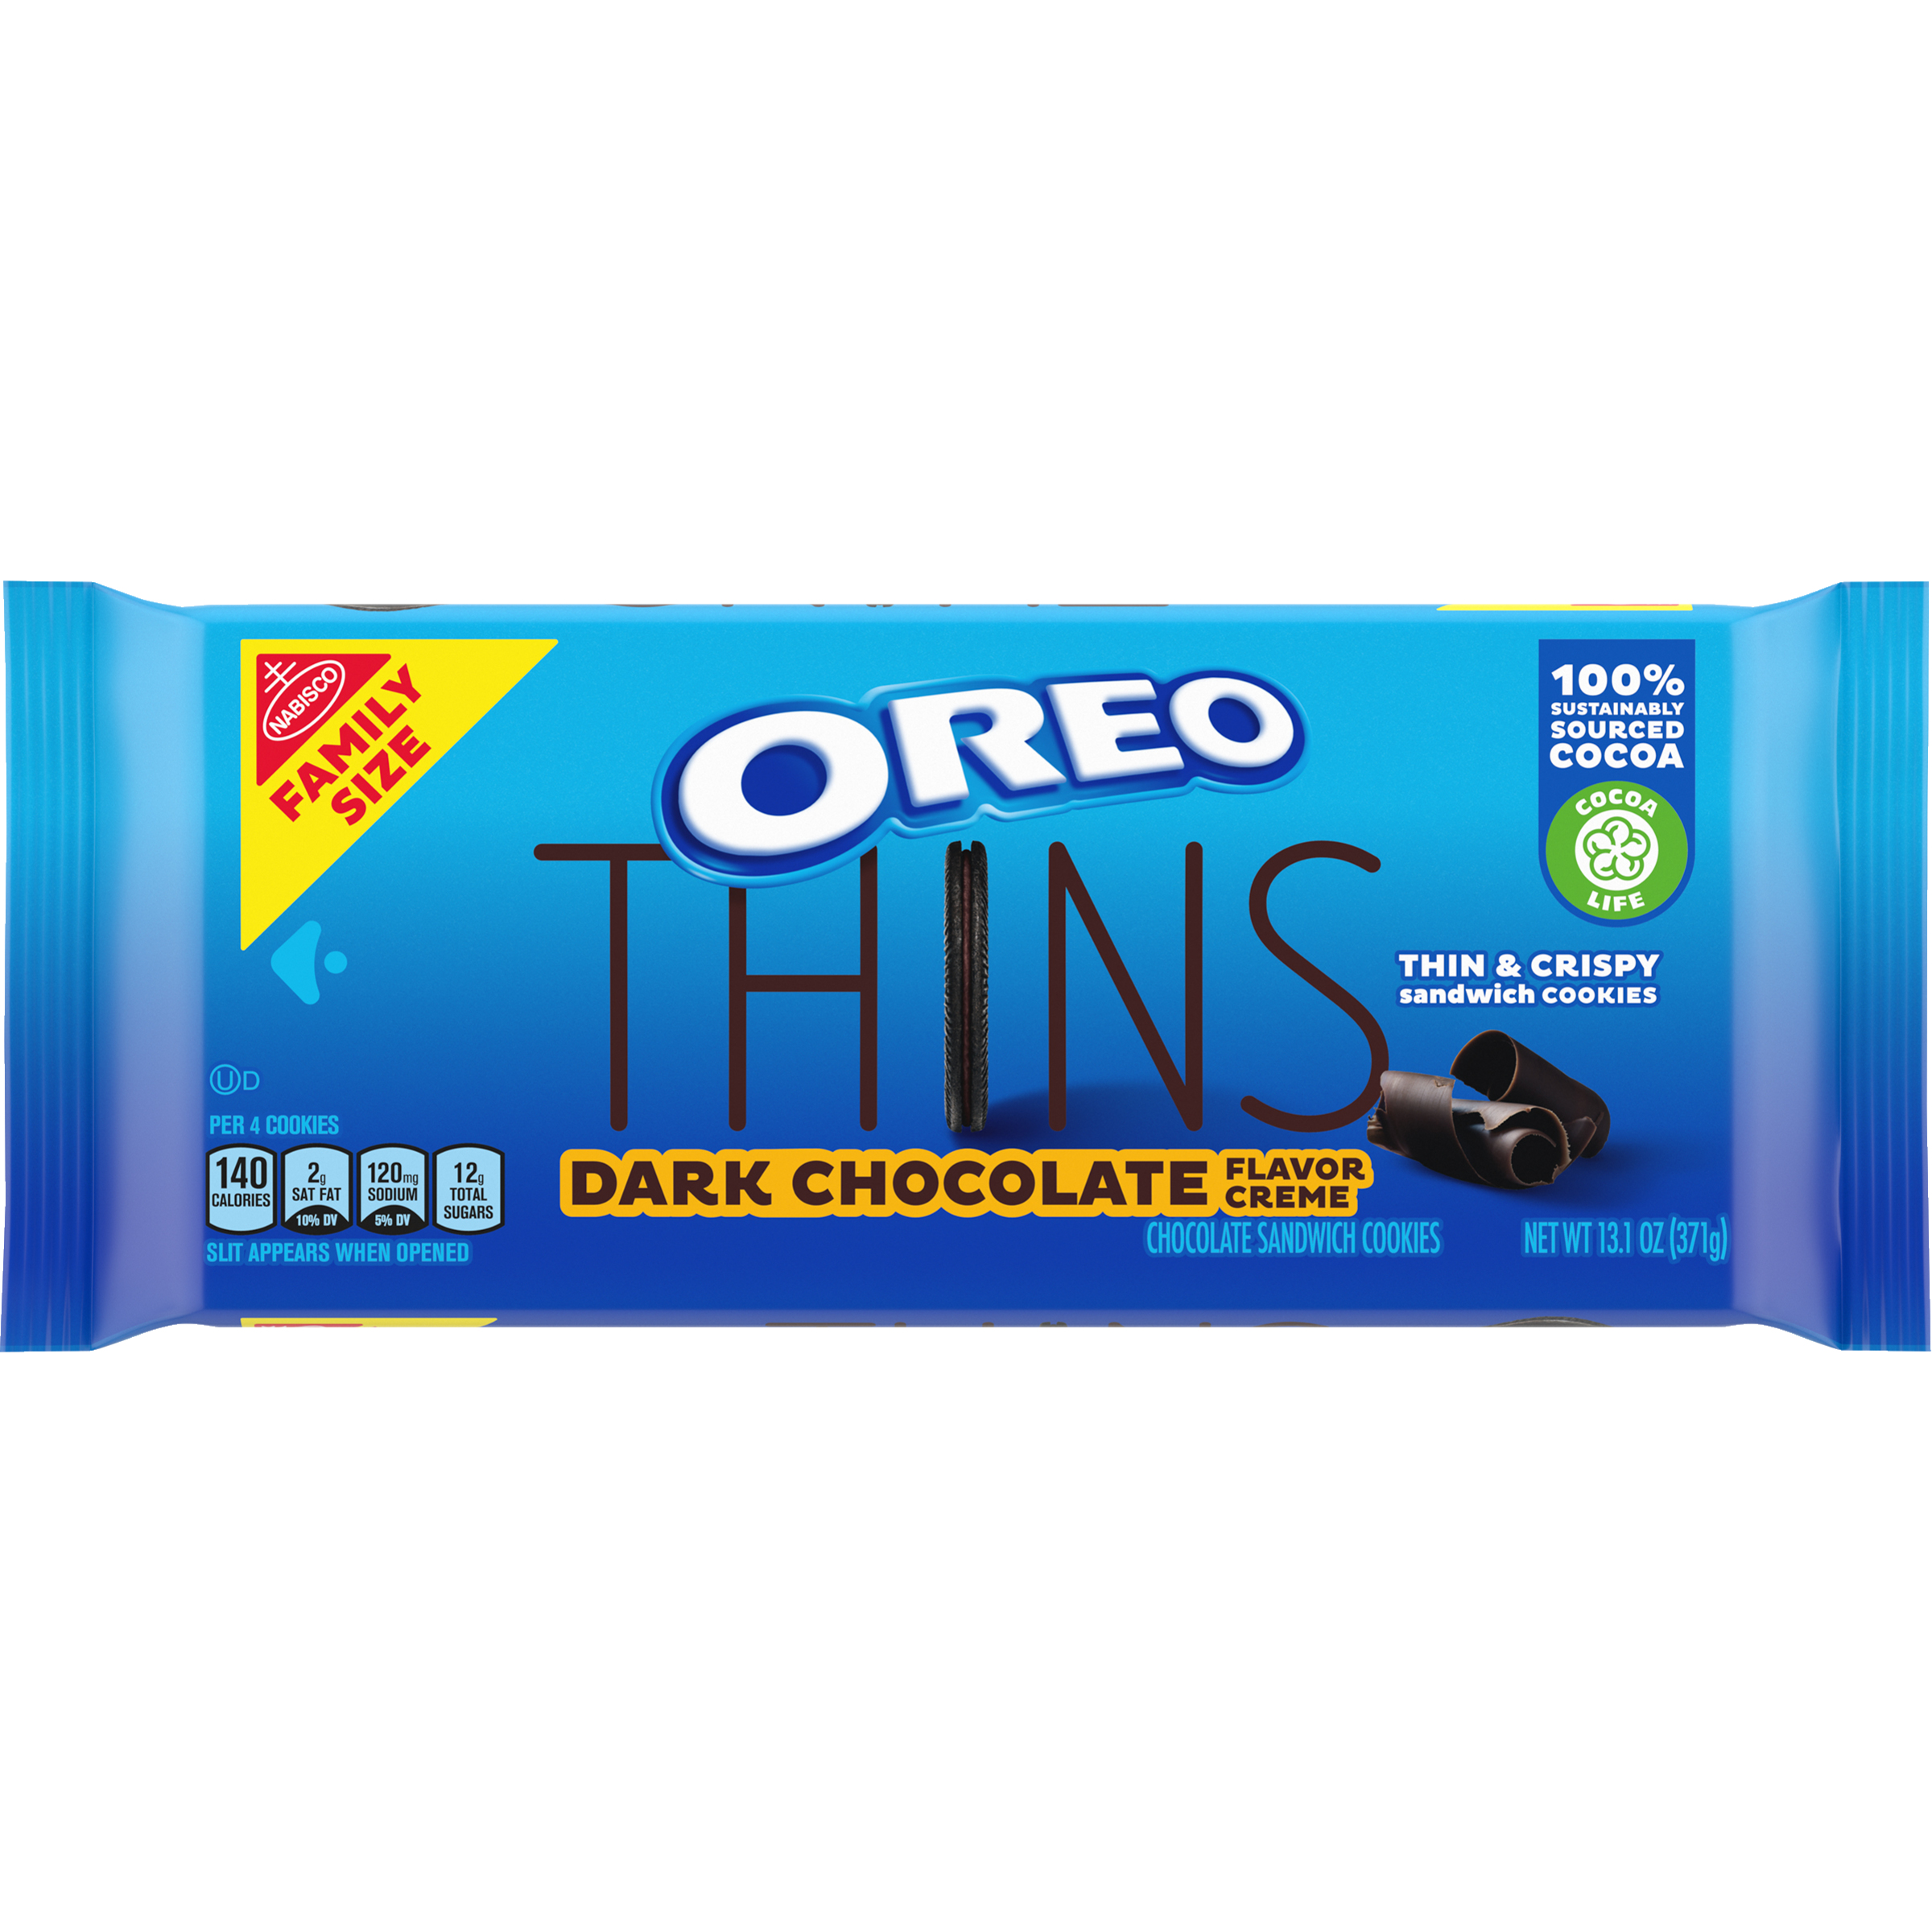 OREO Thins Dark Chocolate Creme Sandwich Cookies, Family Size, 13.1 oz-1